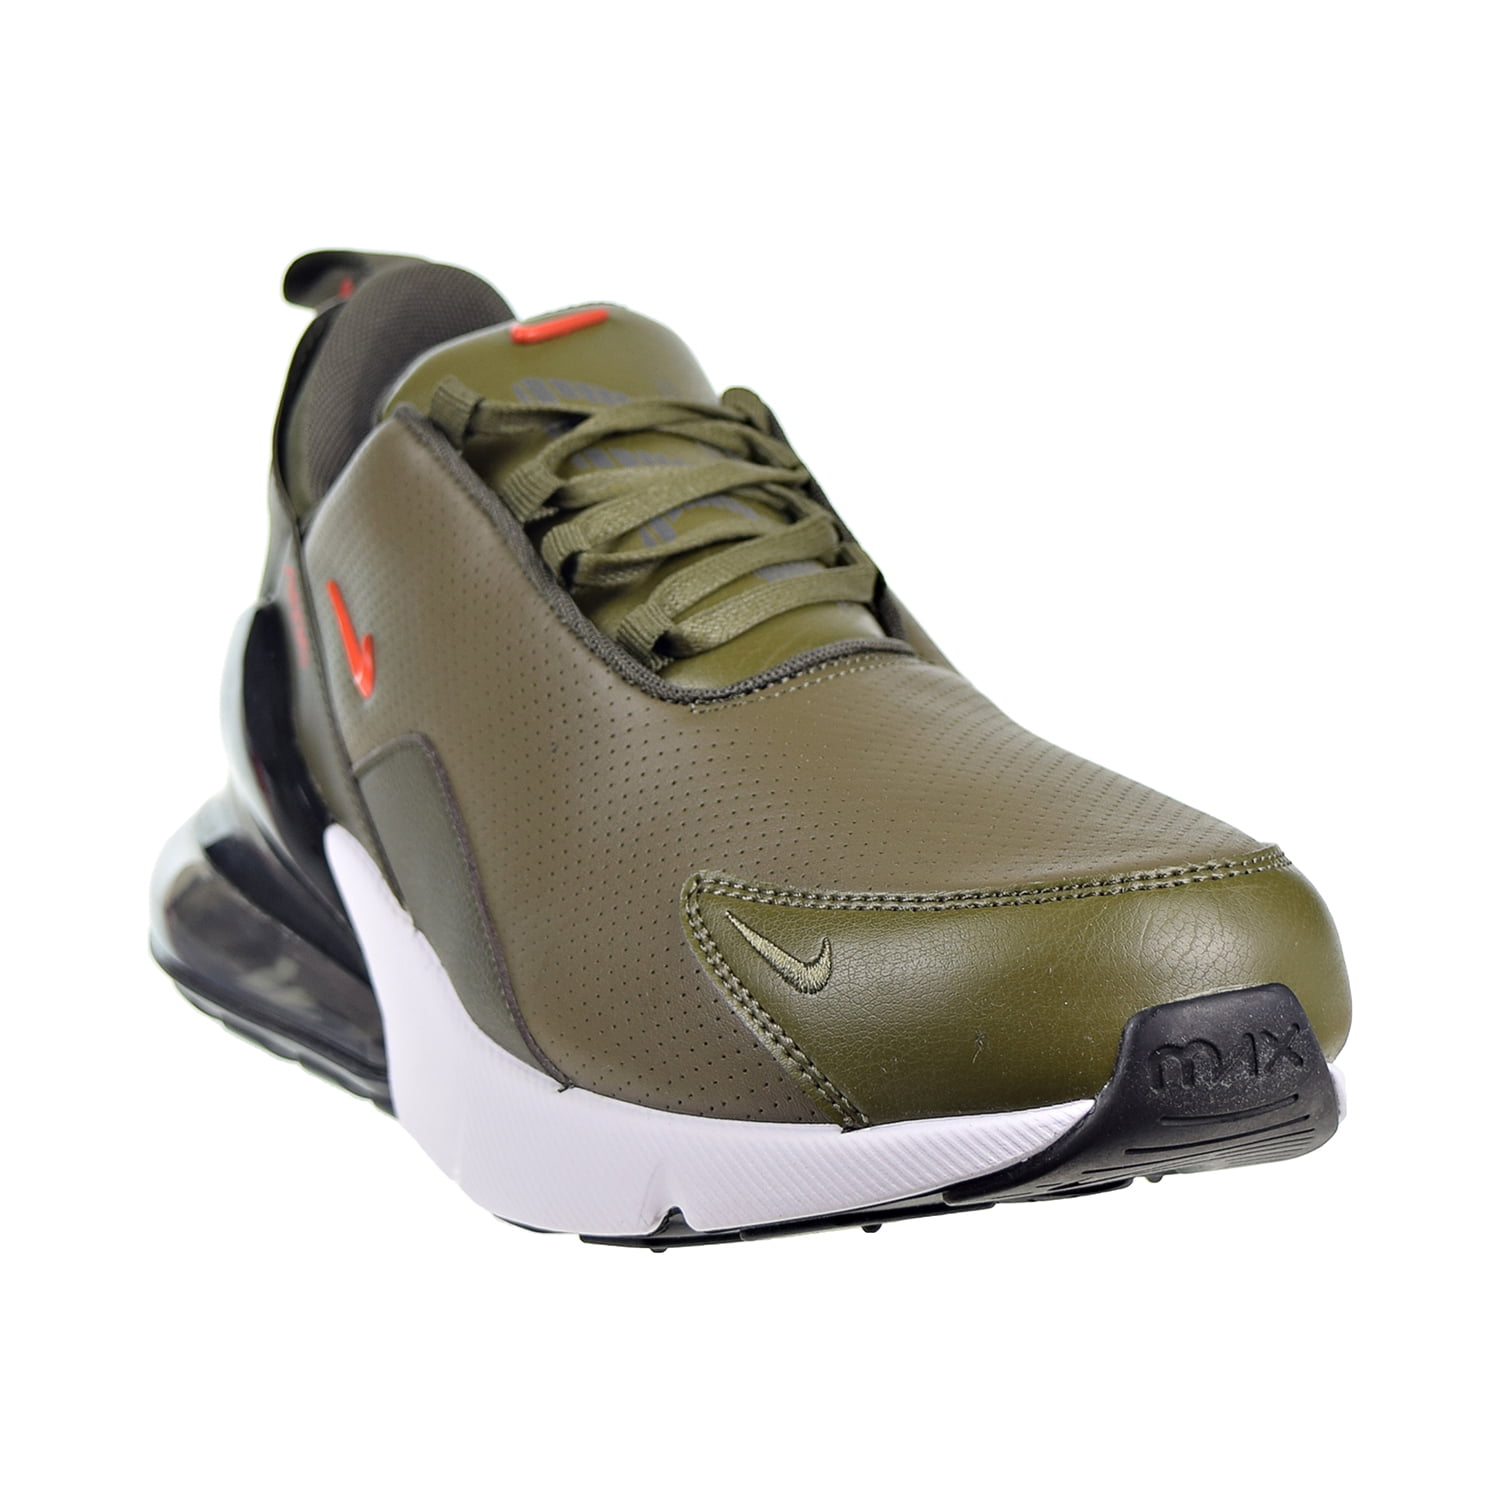 Grillo Muy enojado inferencia Nike Air Max 270 Premium Leather Men's Shoes Medium Olive/Team Orange  bq6171-200 - Walmart.com